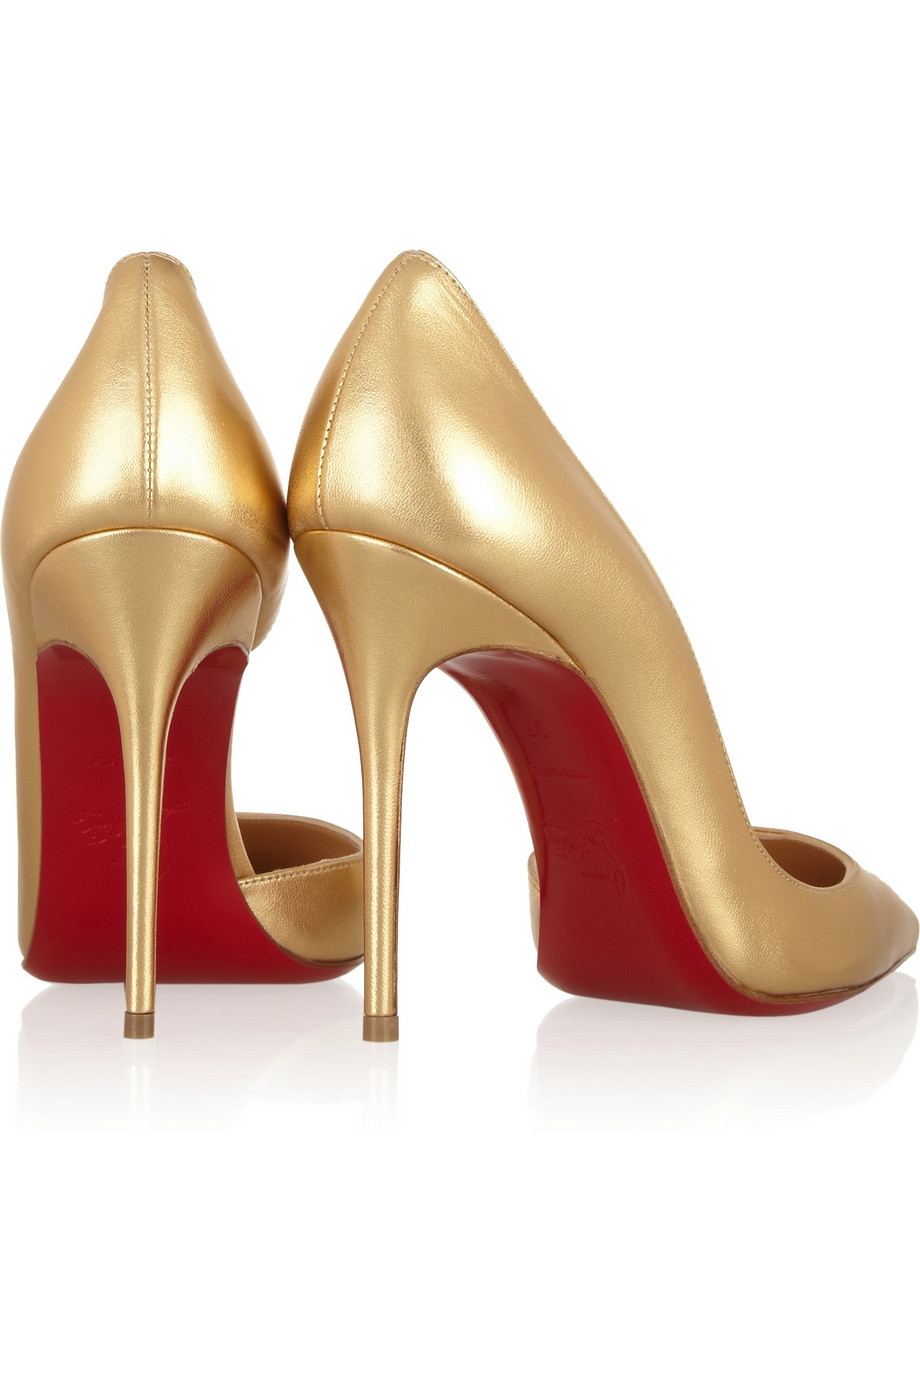 usa replica shoes - christian louboutin iriza metallic - Catholic Commission for ...